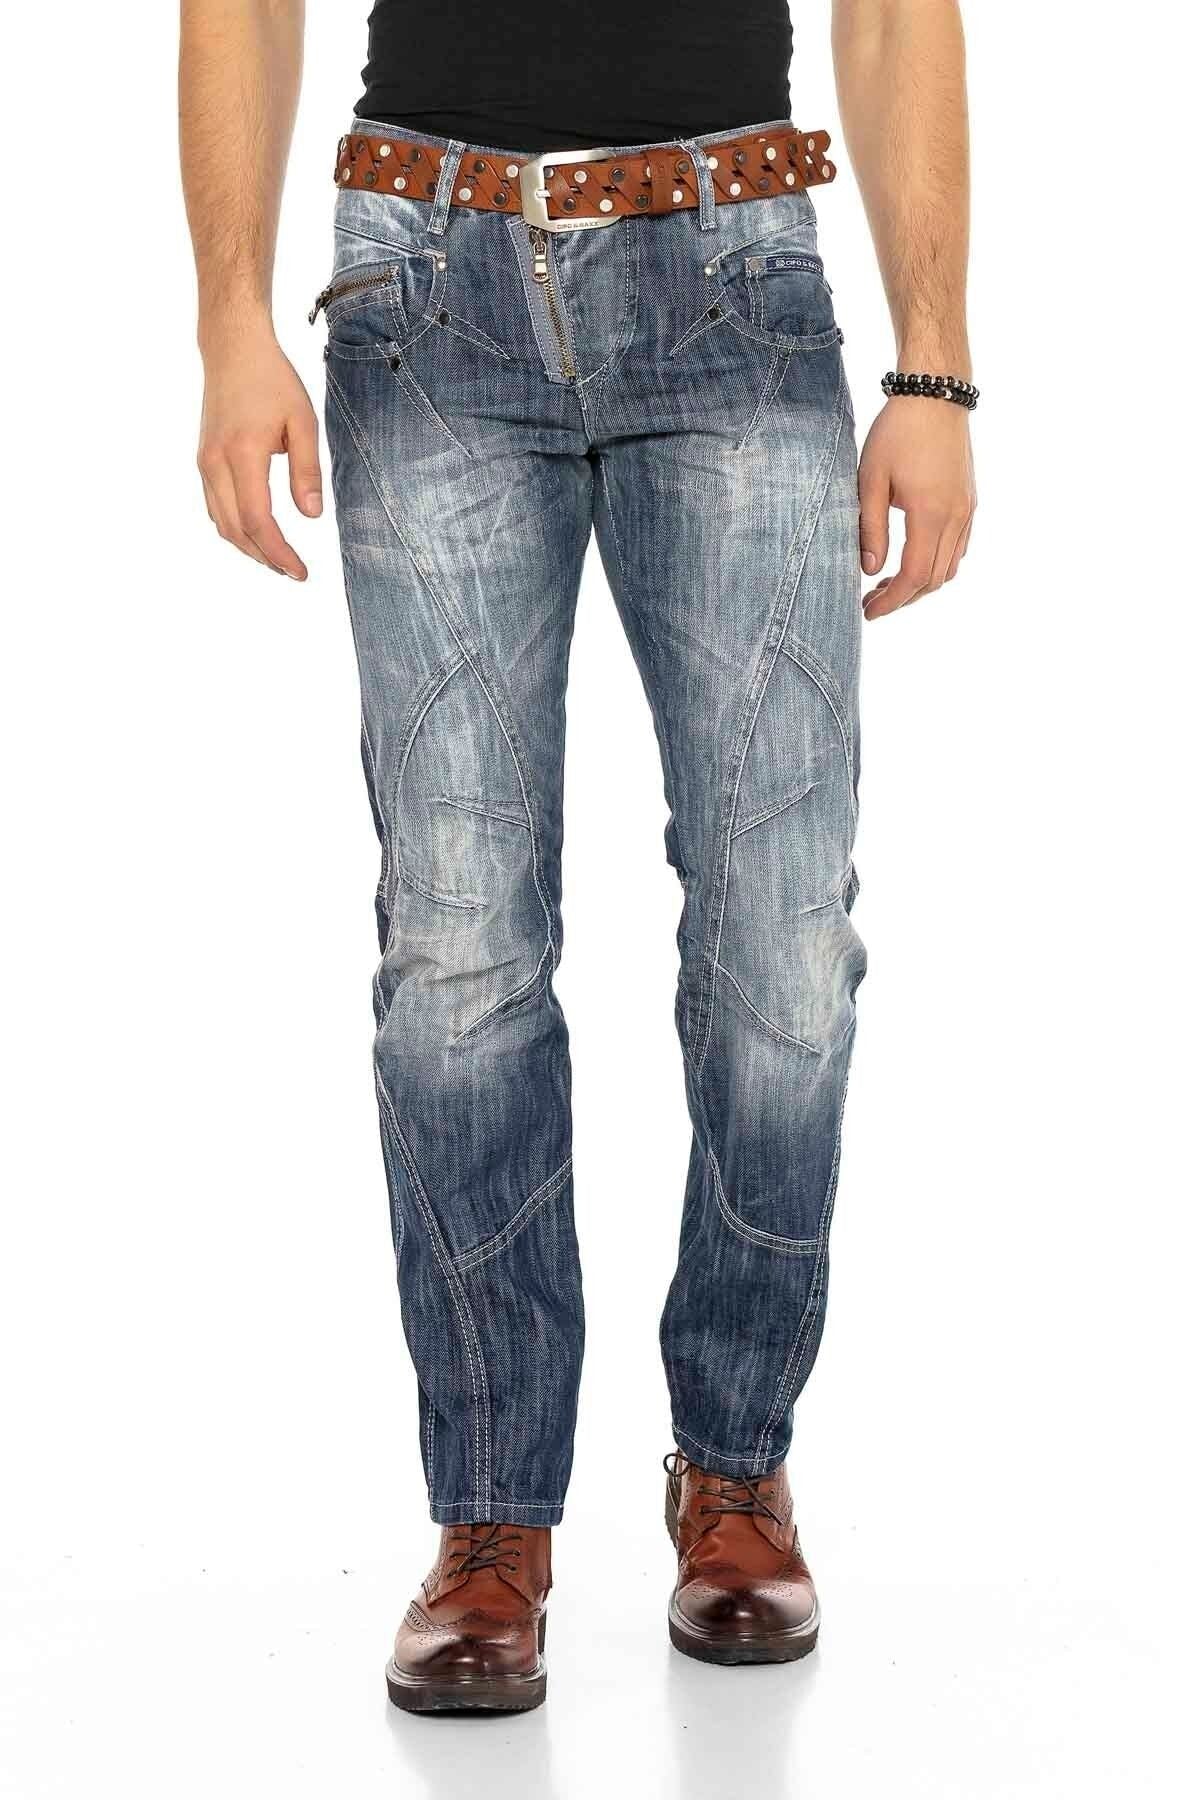 C-0751 STANDARD men's jeans STRAIGHT FIT